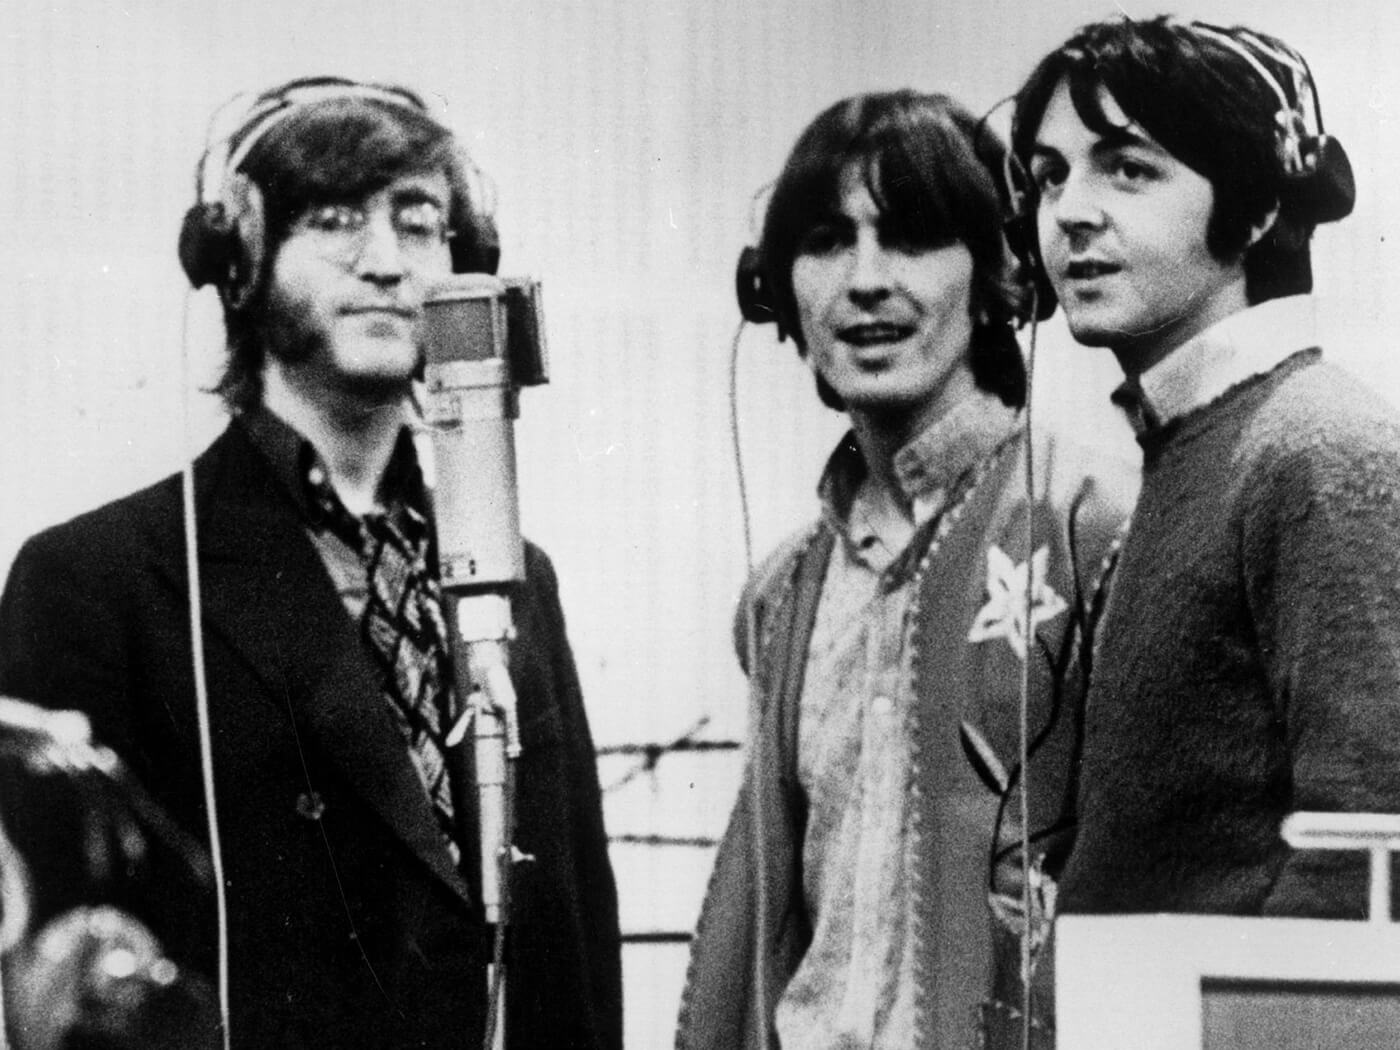 The Beatles' John Lennon, George Harrison and Paul McCartney